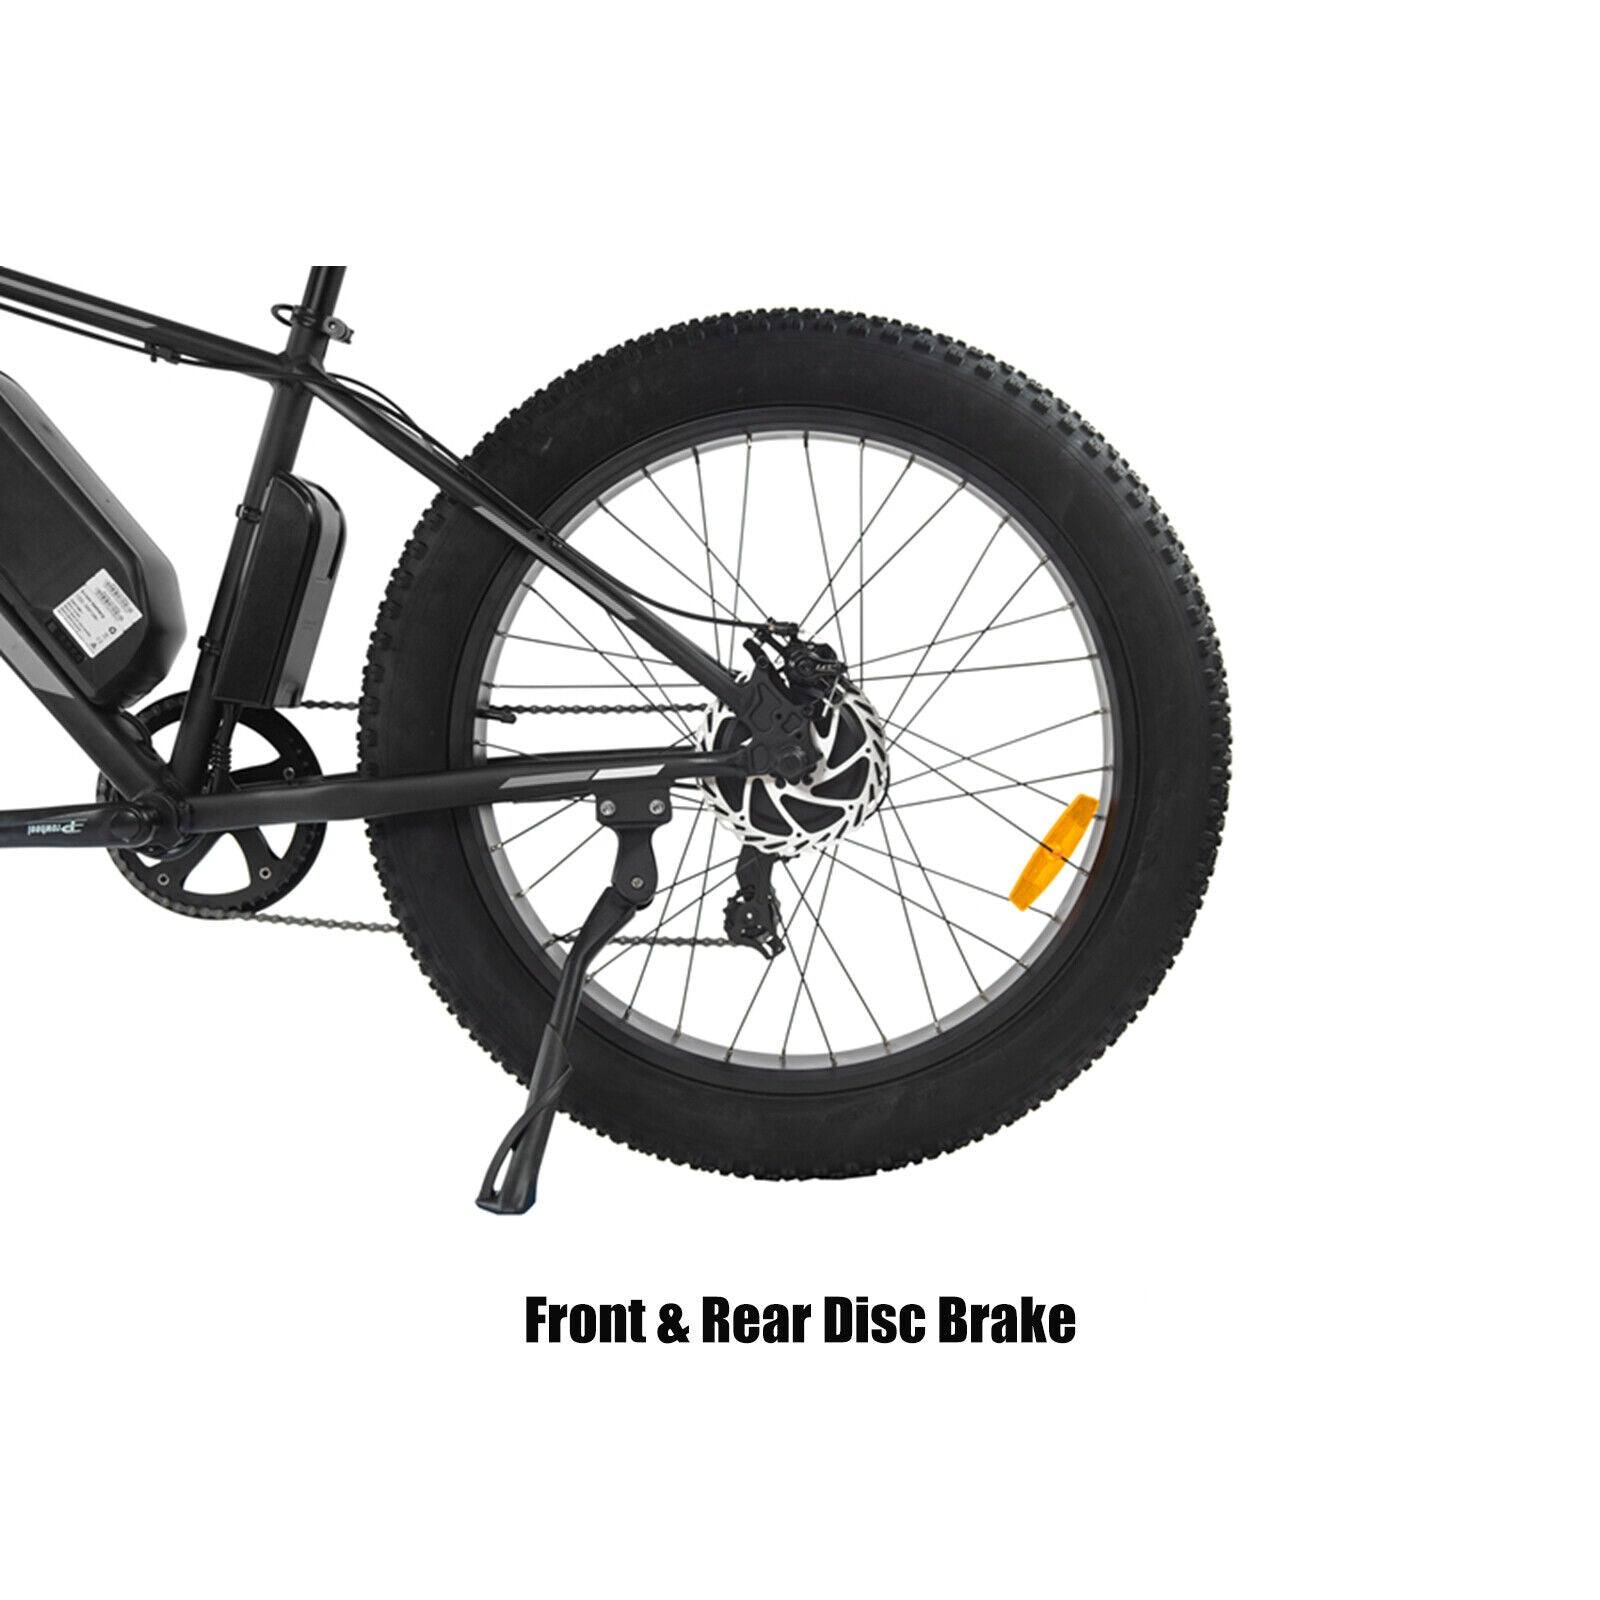 TDR 500W Fat Tyre Premium Electric Bike with 48V 13Ah Long Range Battery - TDRMOTO